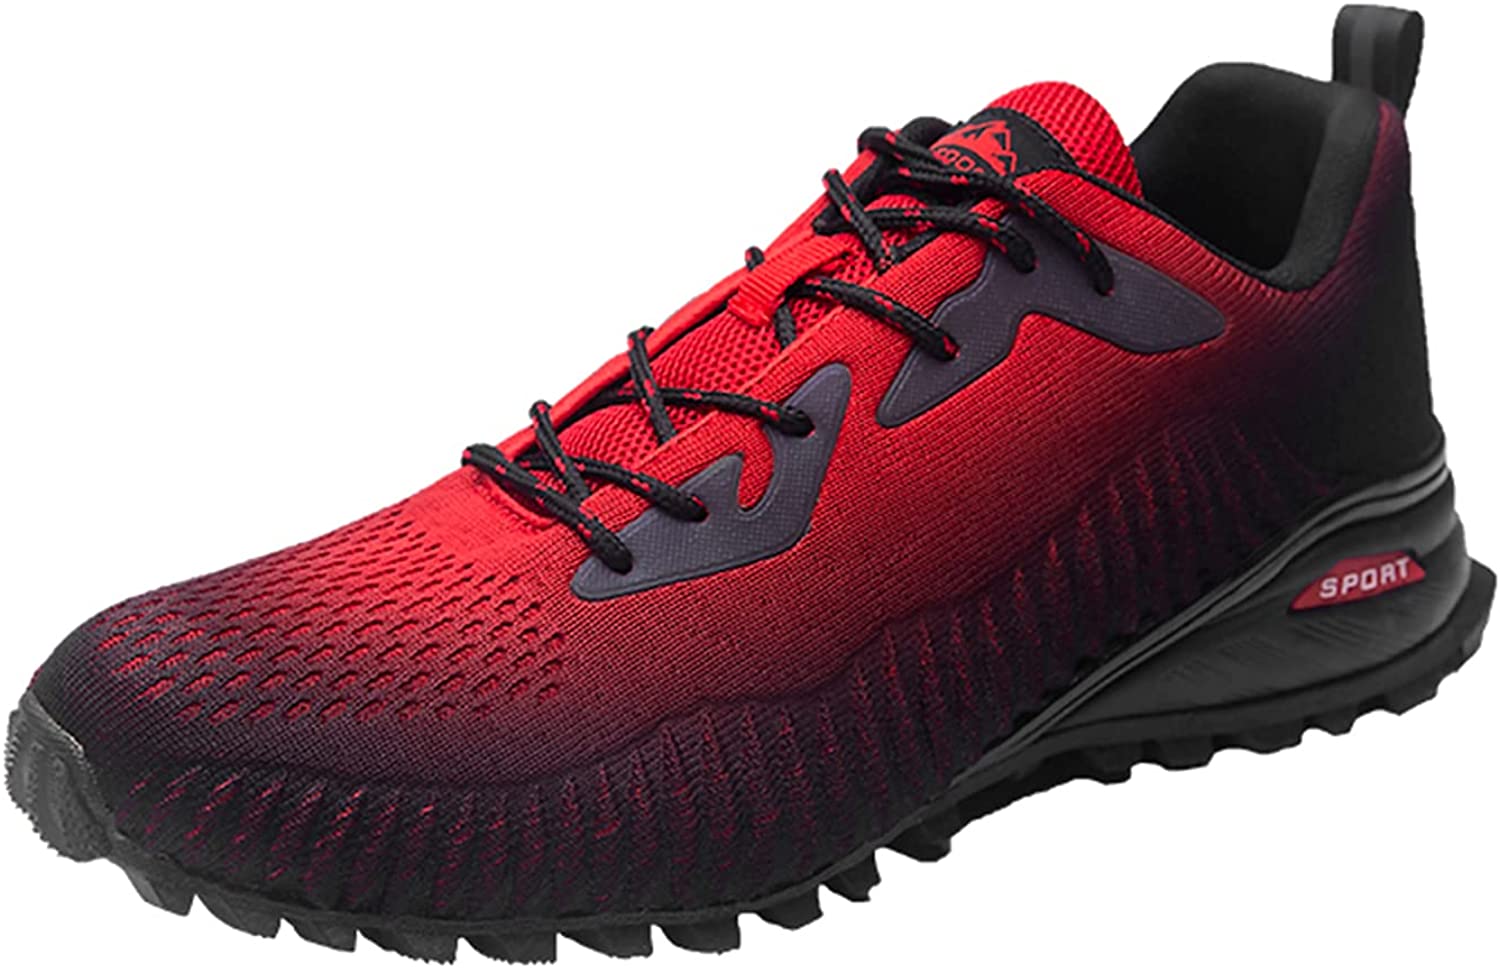 Kricely Men's Trail Running Shoes Waterproof Hiking Shoes Lightweight Breathable Walking Footwear Athletic Sneakers 